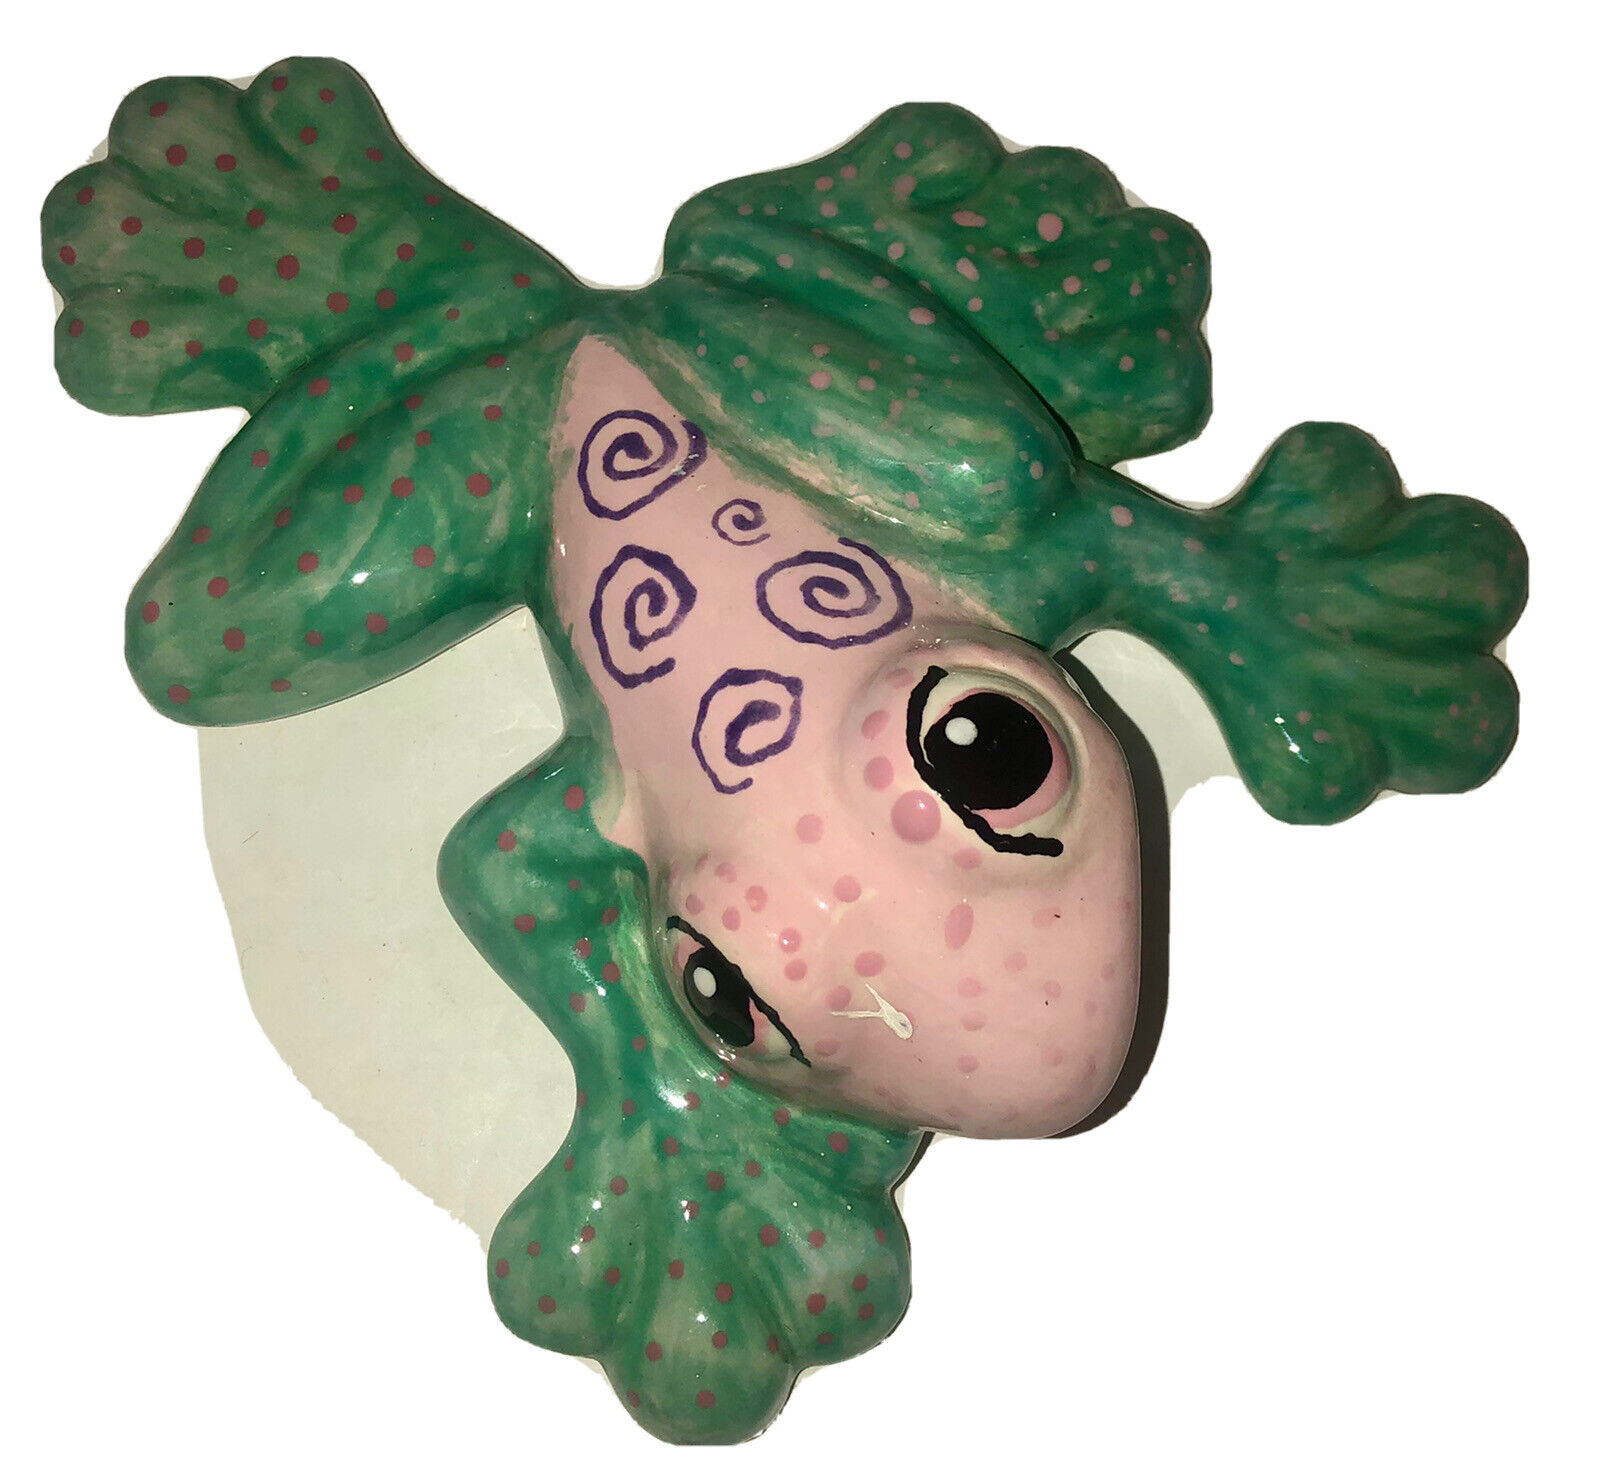 Signed Hobbyist’s Whimsical Ceramic Wall Light Green, Poka Dot Pink Purple Frog